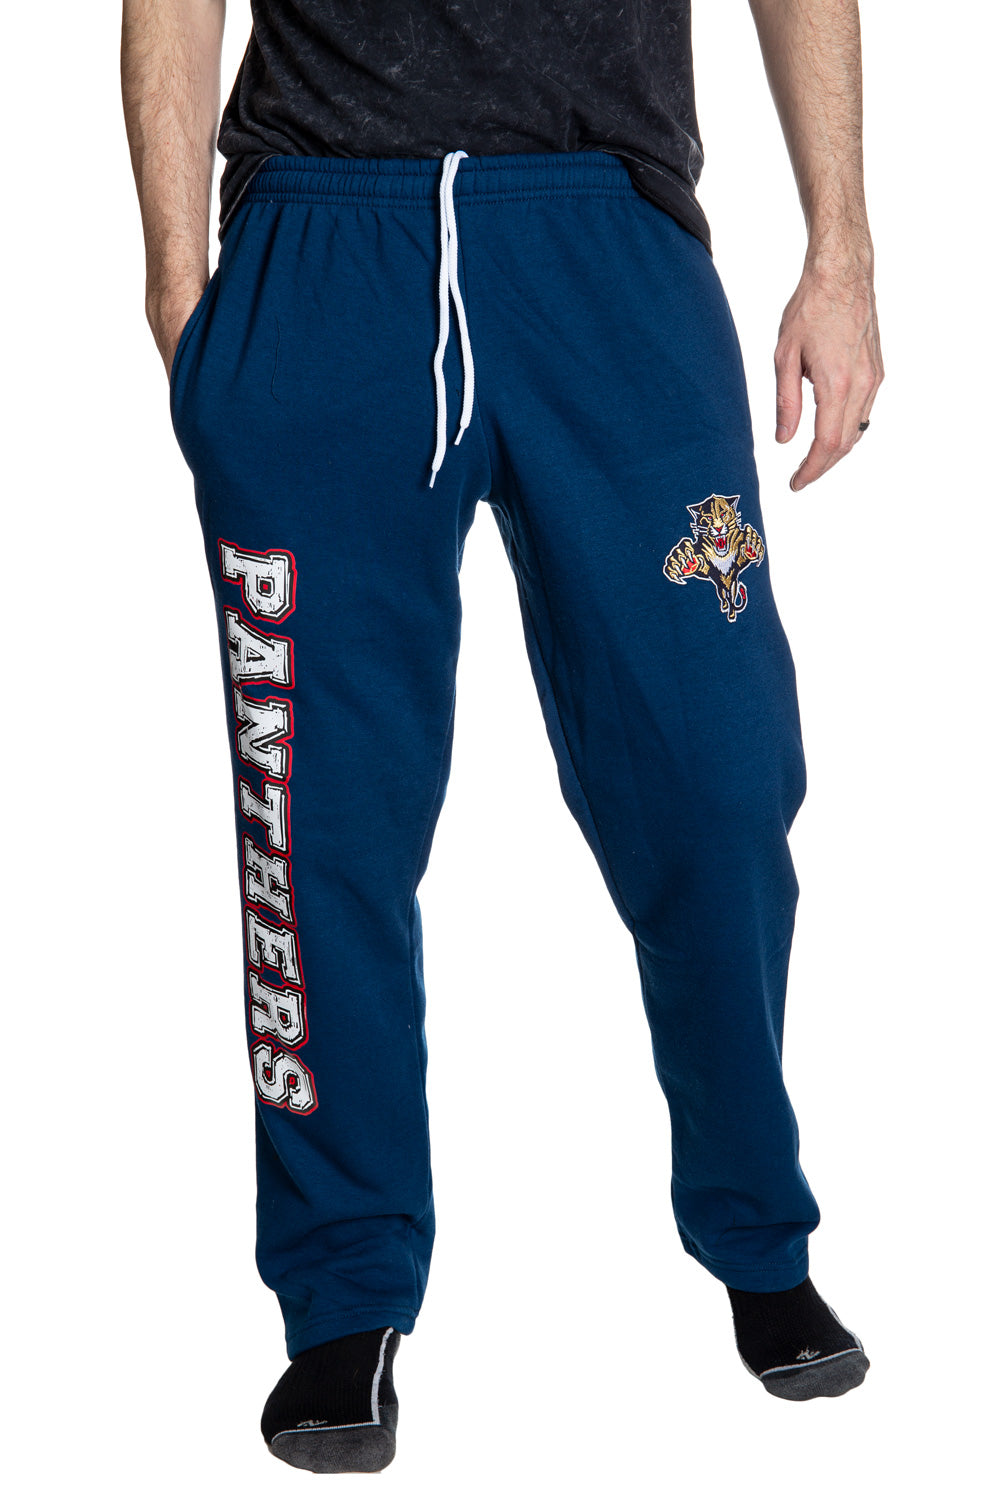 Florida Panthers Premium Fleece Sweatpants Front View.